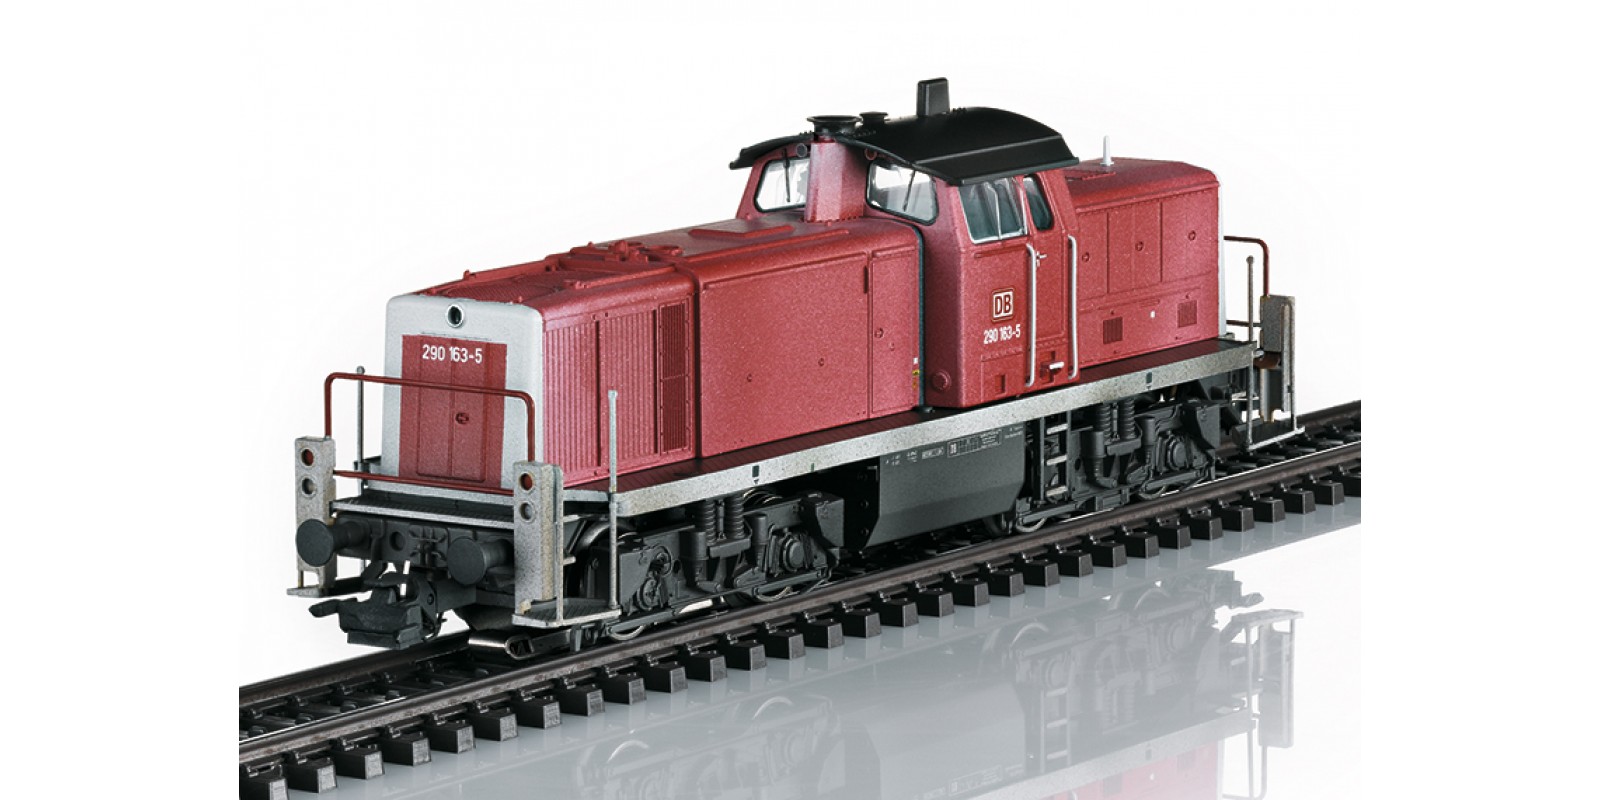 39902 - Class 290 Diesel Locomotive